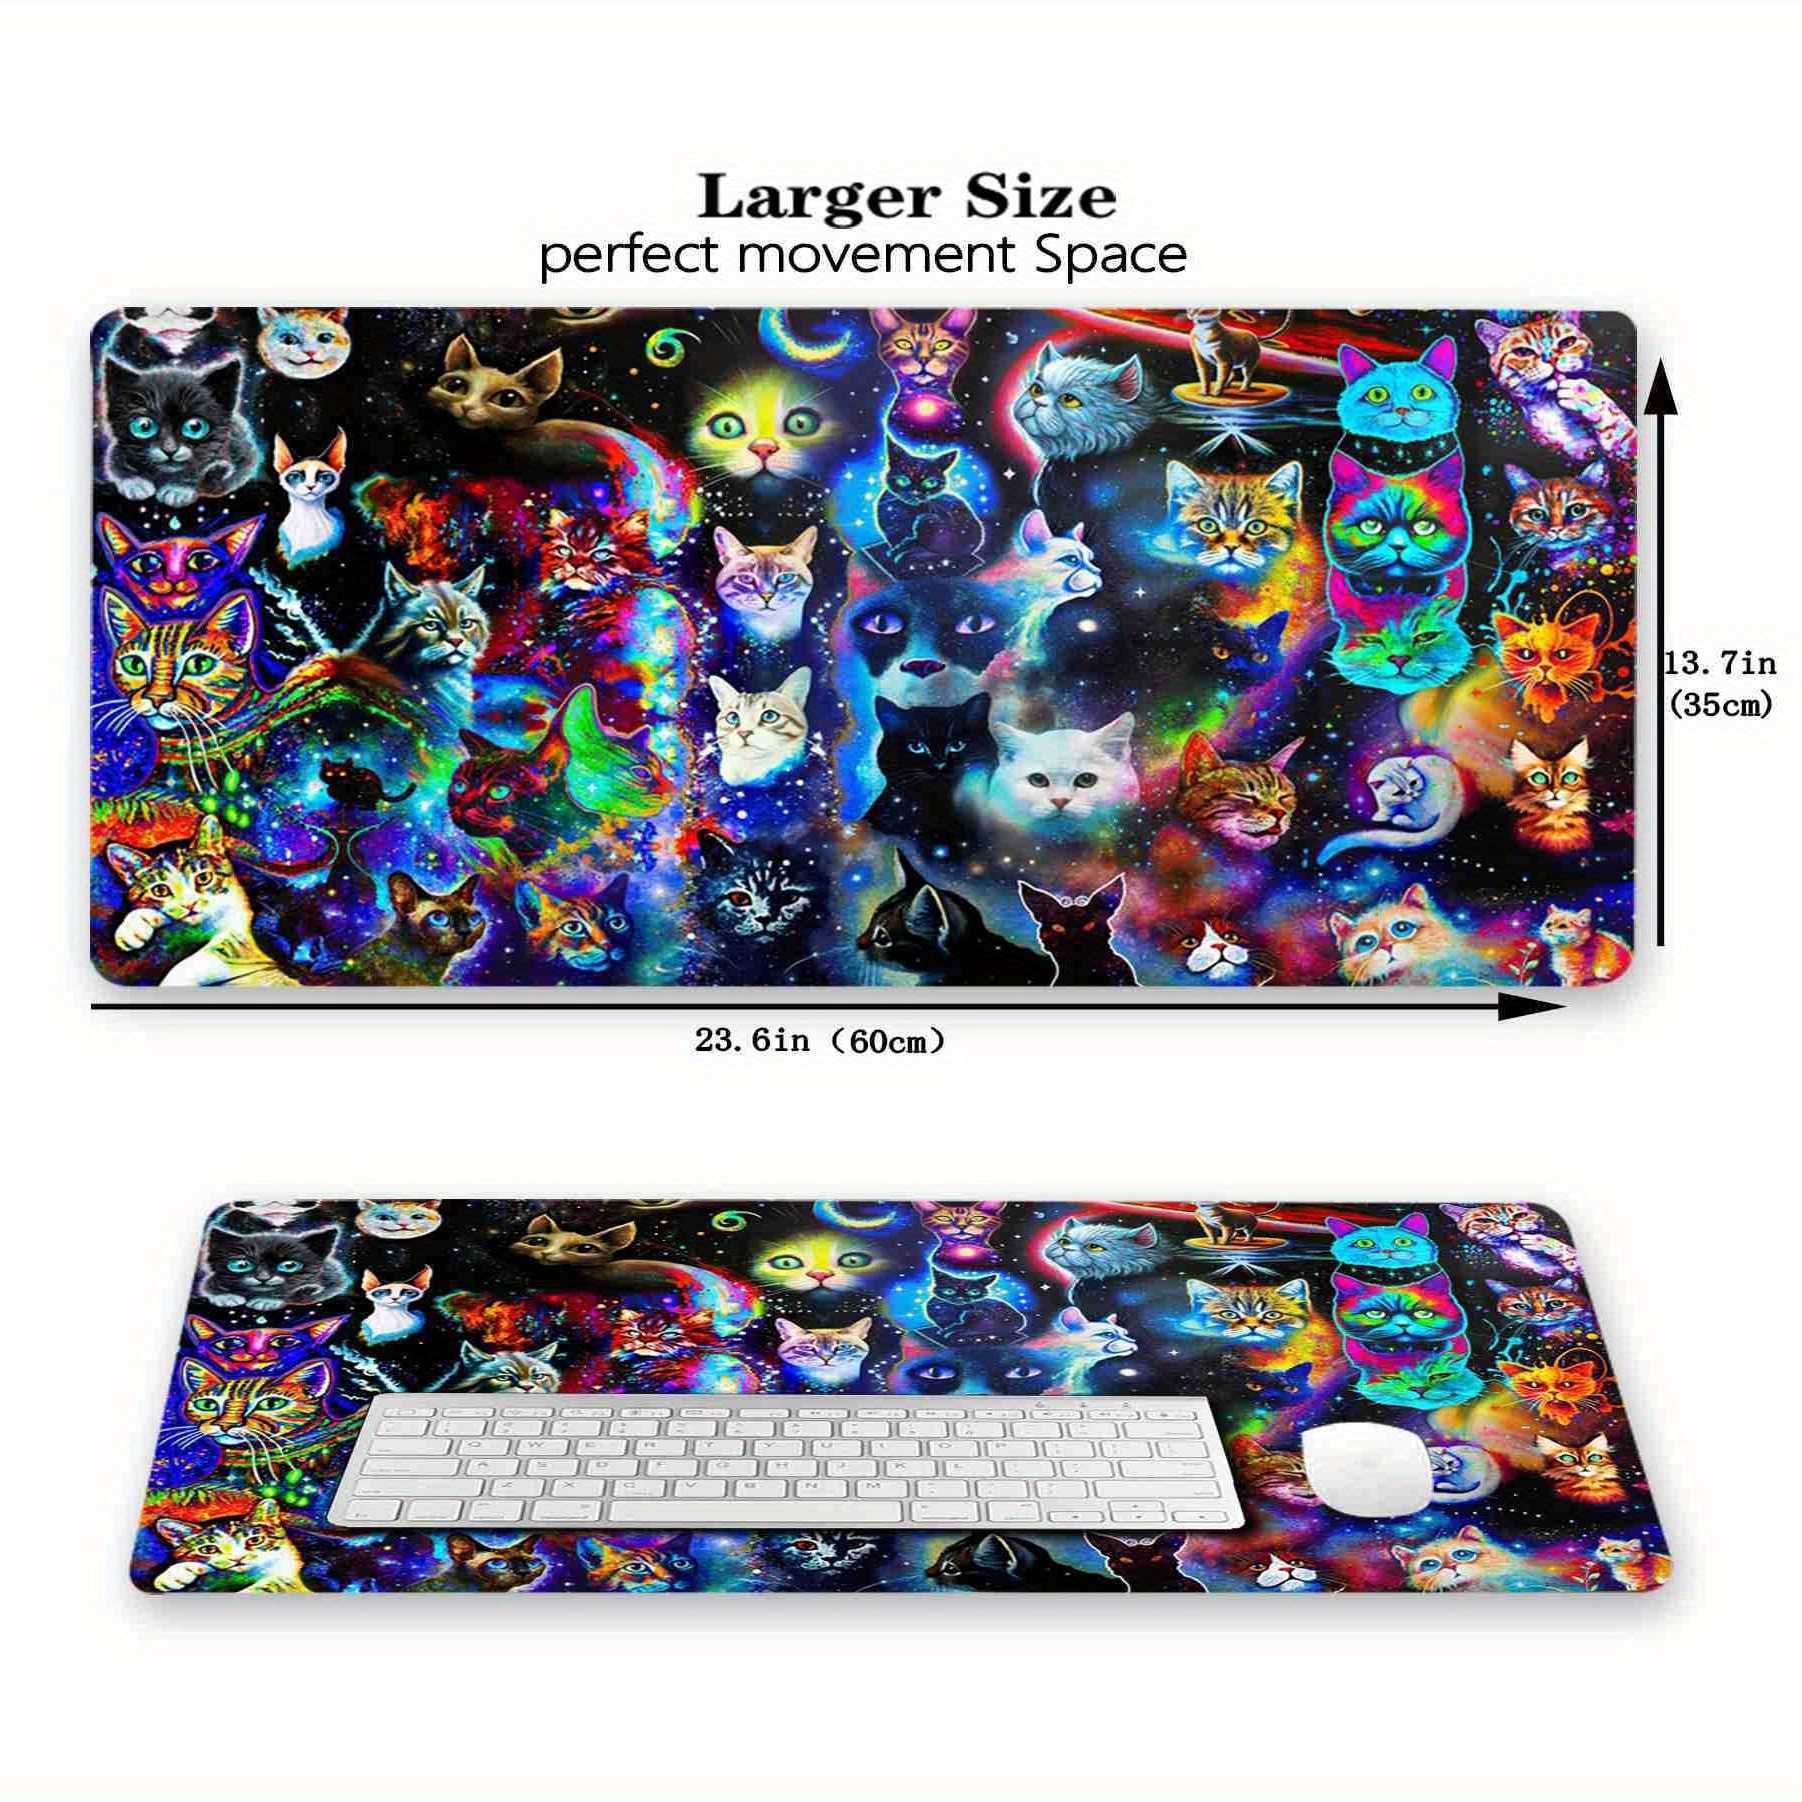 Madness Combat Mouse Pad Computer Gamer Play Keyboard Carpet Anime PC Desk  Mens Printing Table Gaming Mousepad Mat